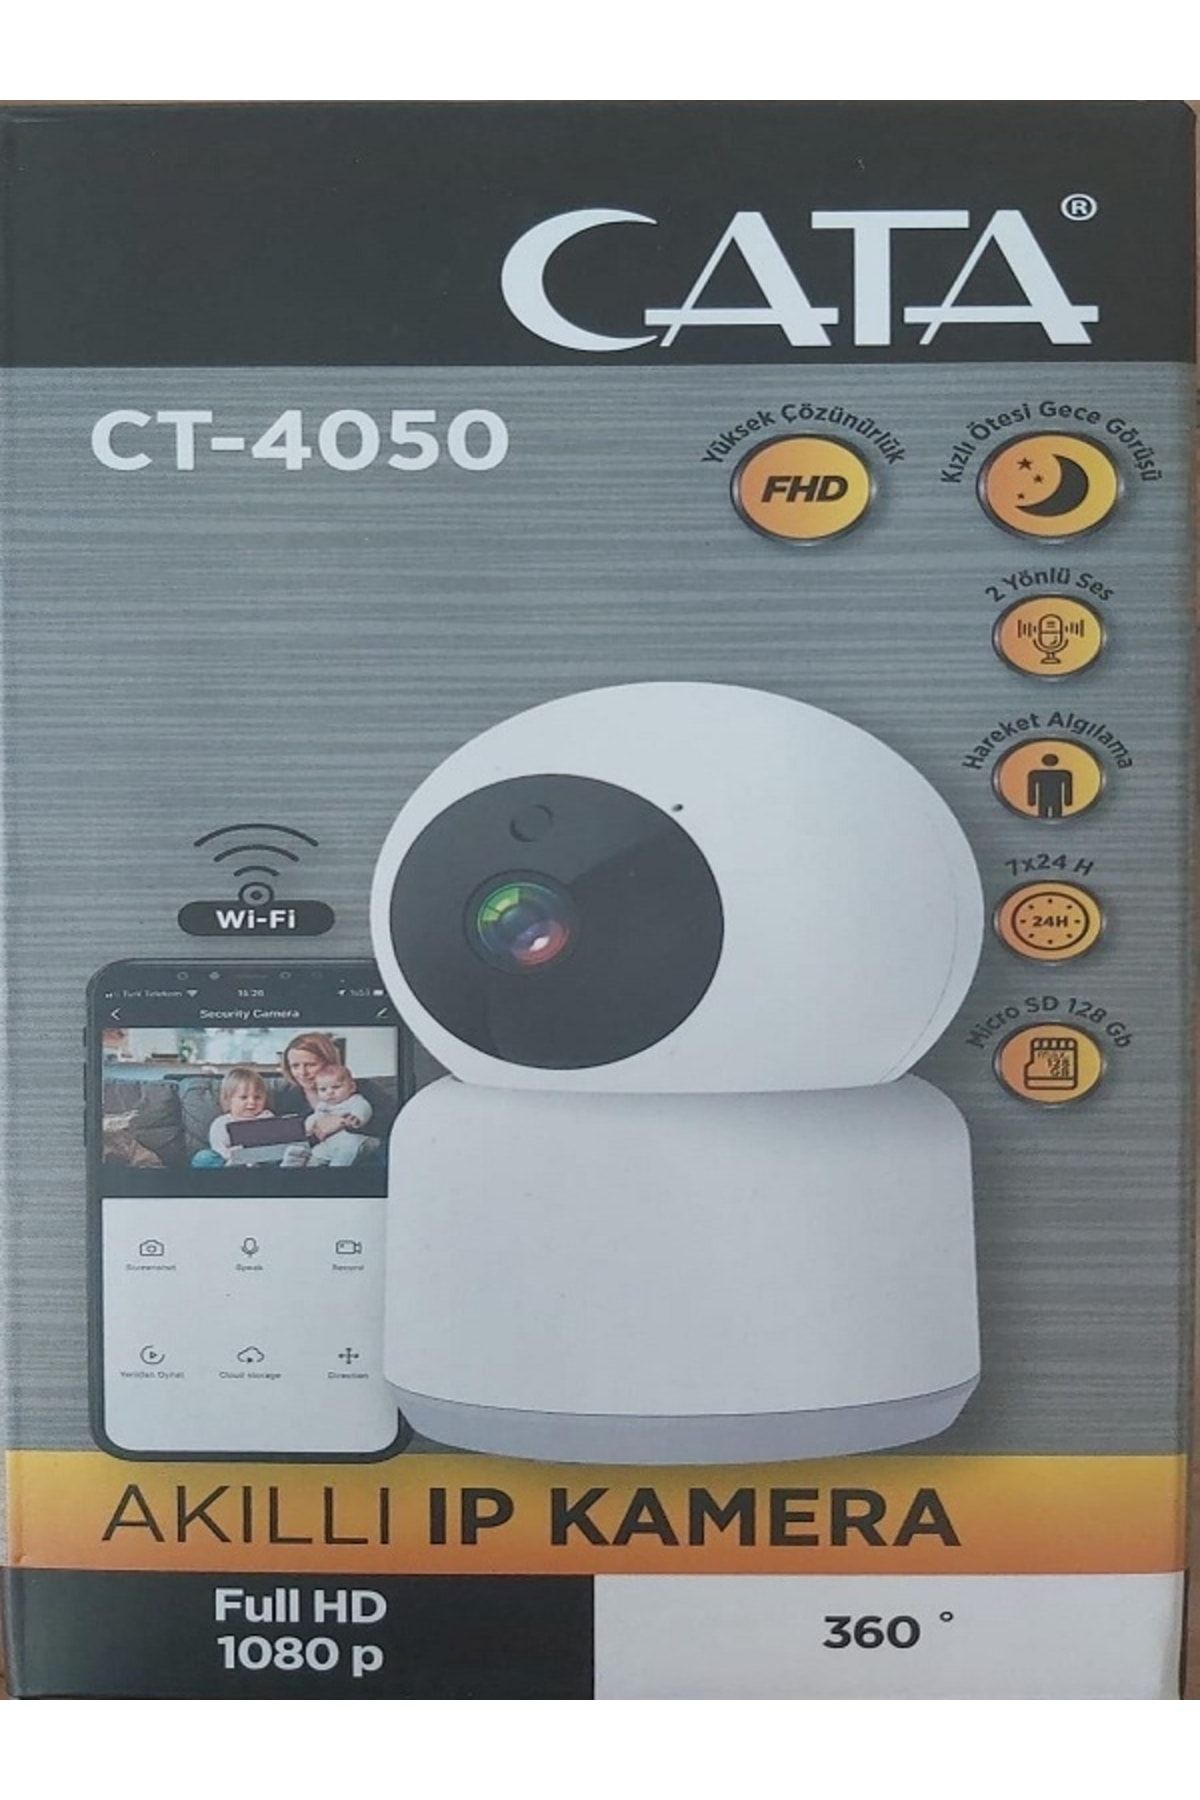 Cata Ct-4050 Akıllı Kamera